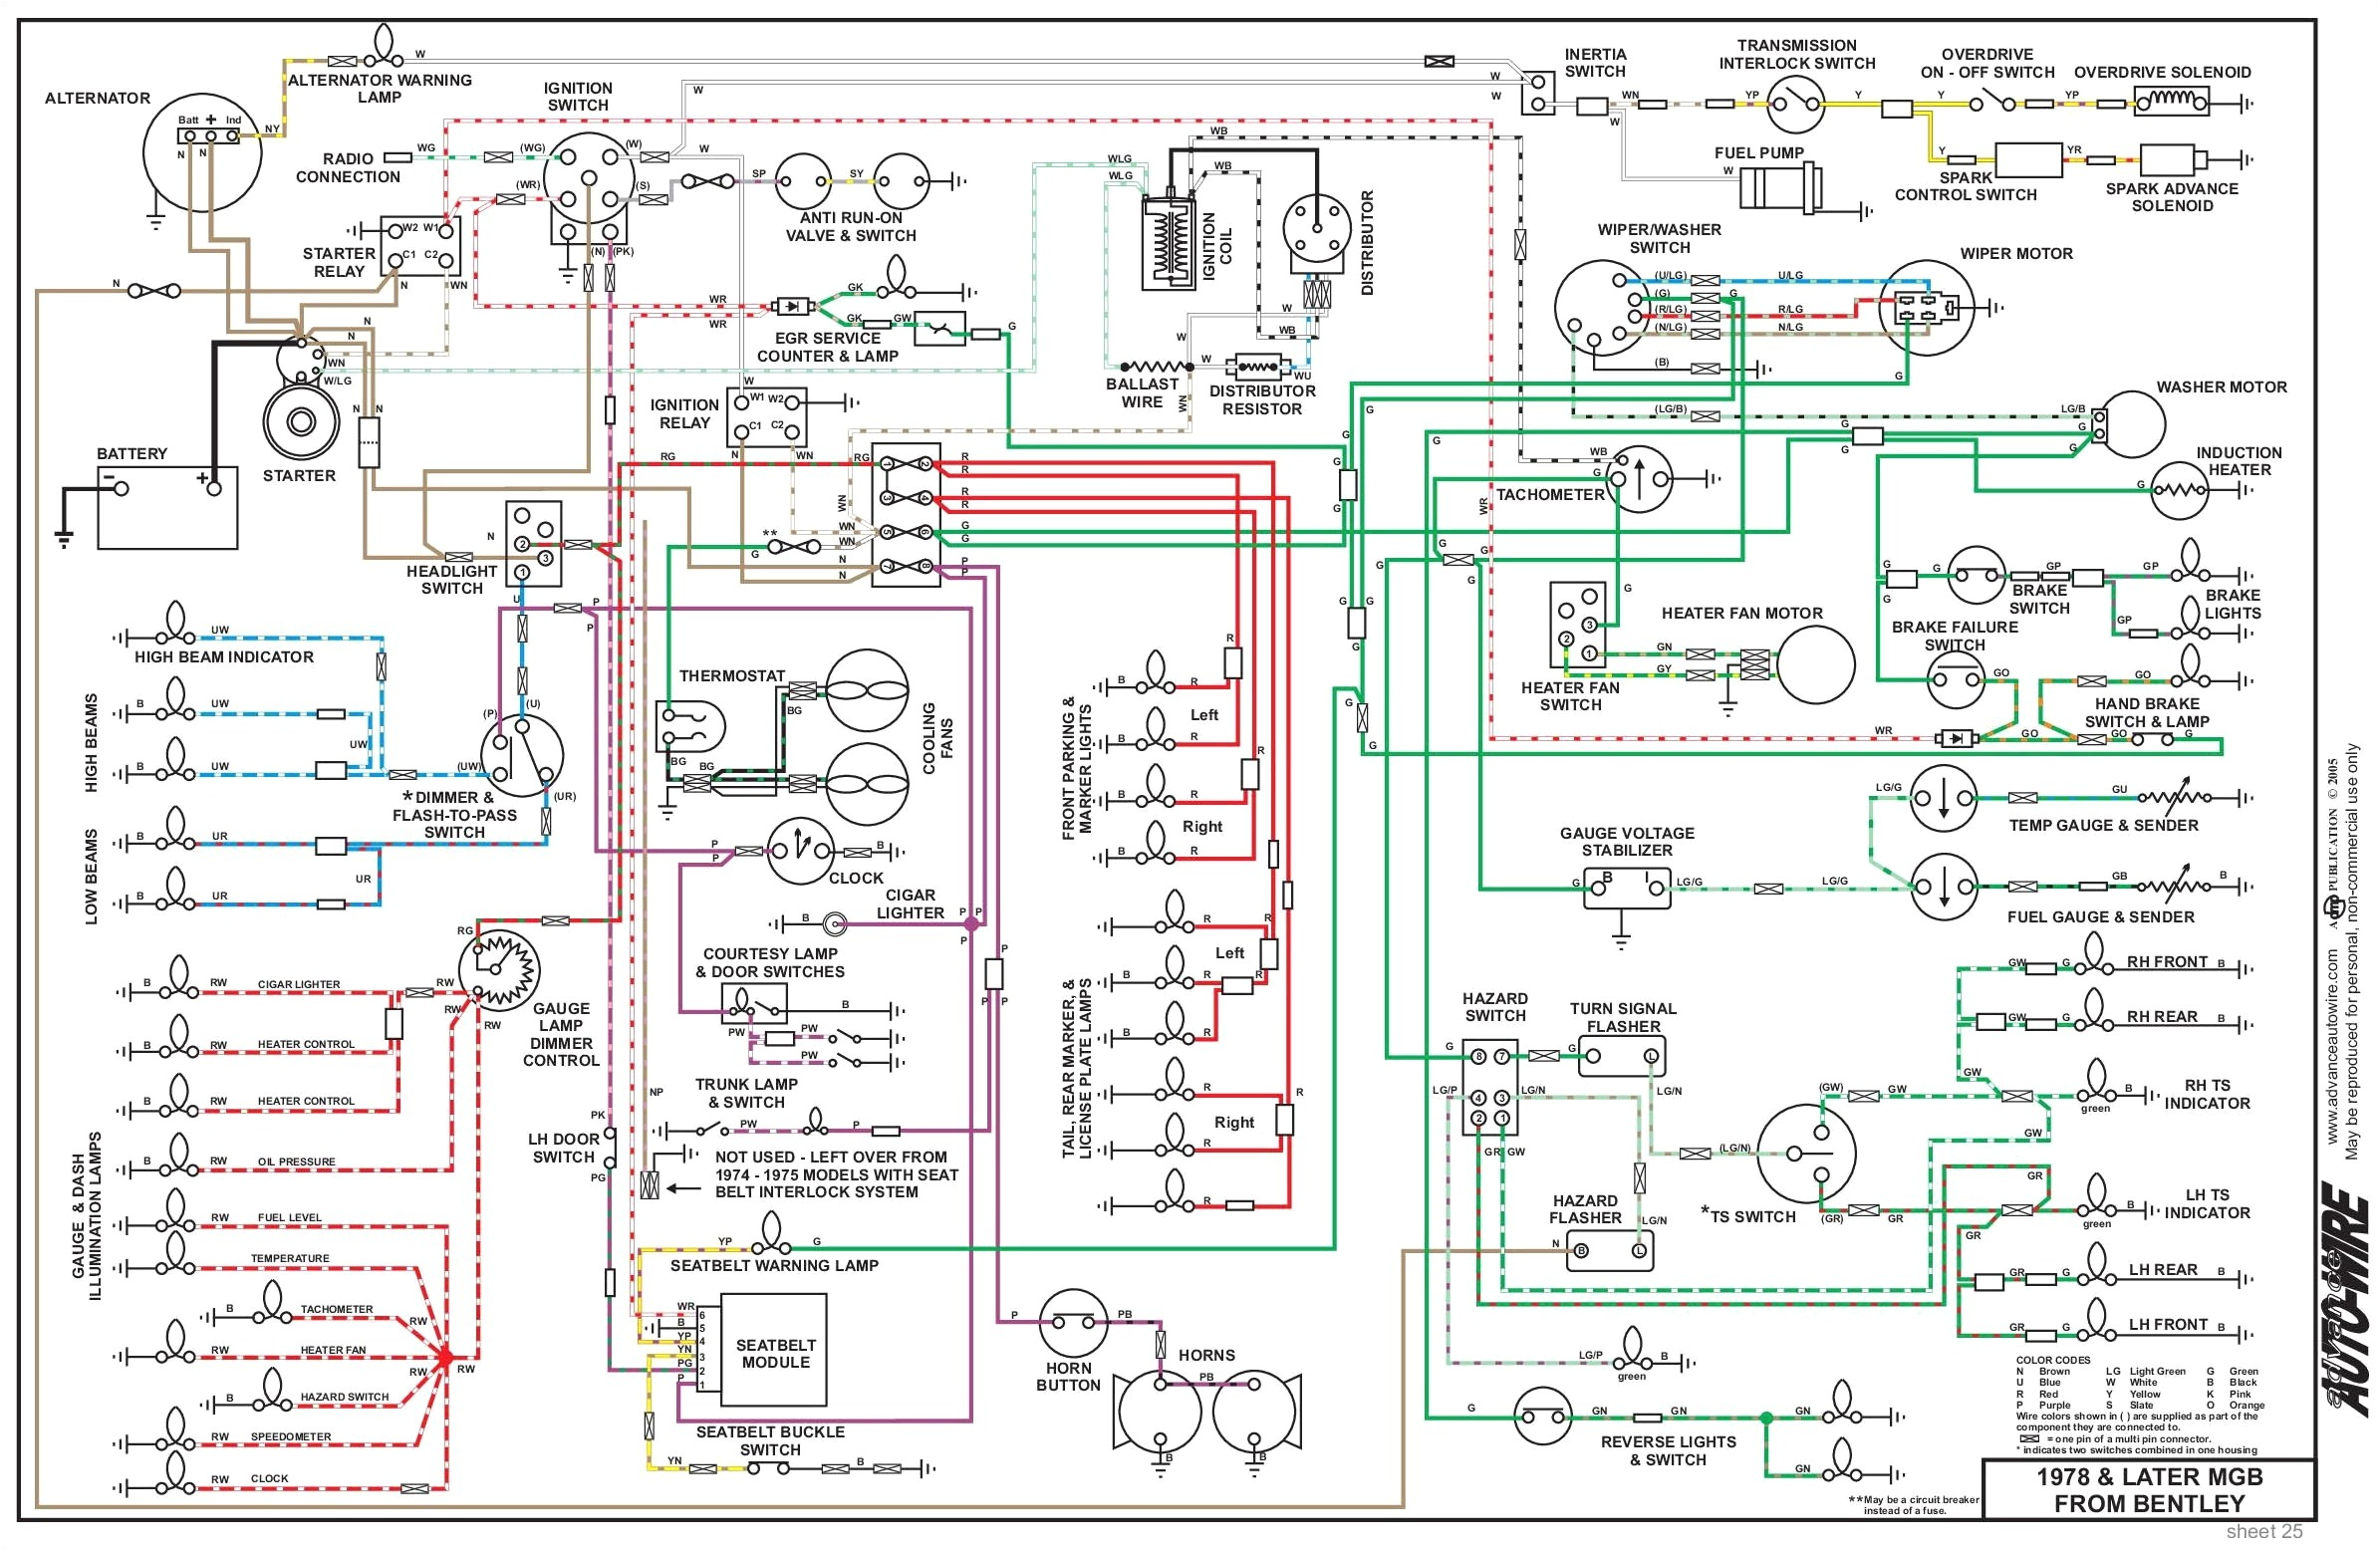 1976 mgb wiring diagram wiring diagram for you 1976 mgb wiring diagram 1976 mgb wiring diagram